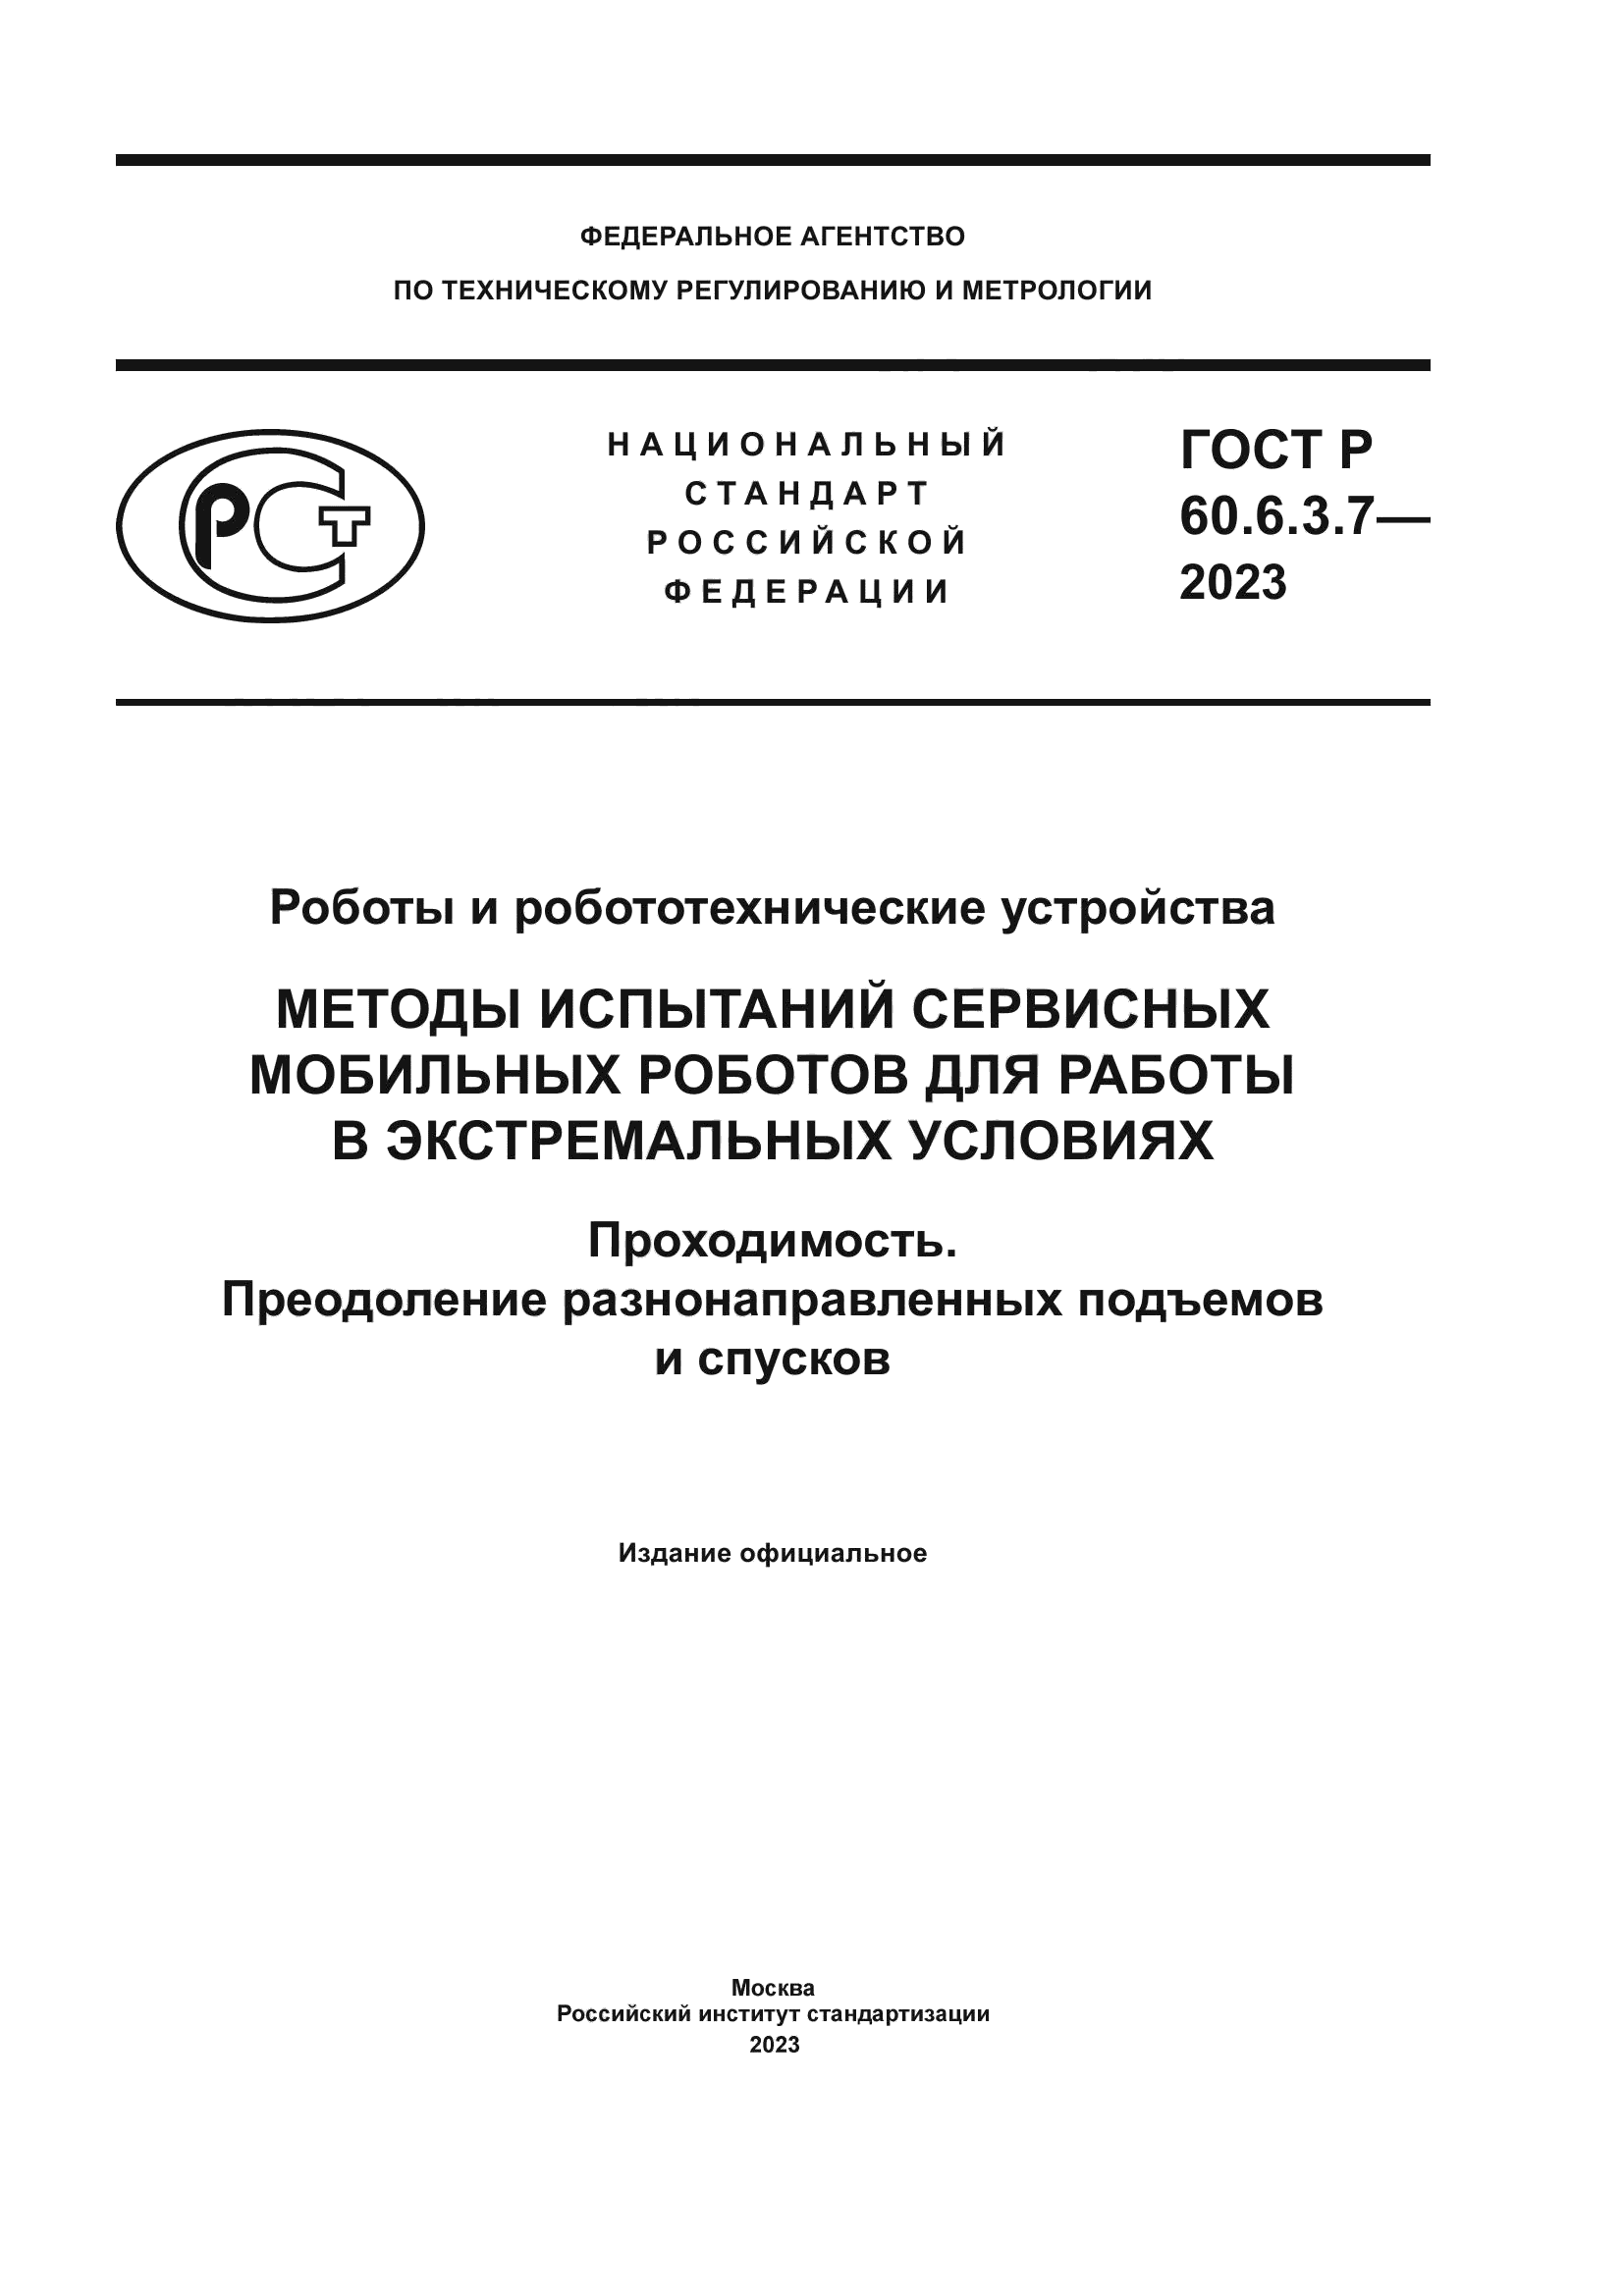 ГОСТ Р 60.6.3.7-2023